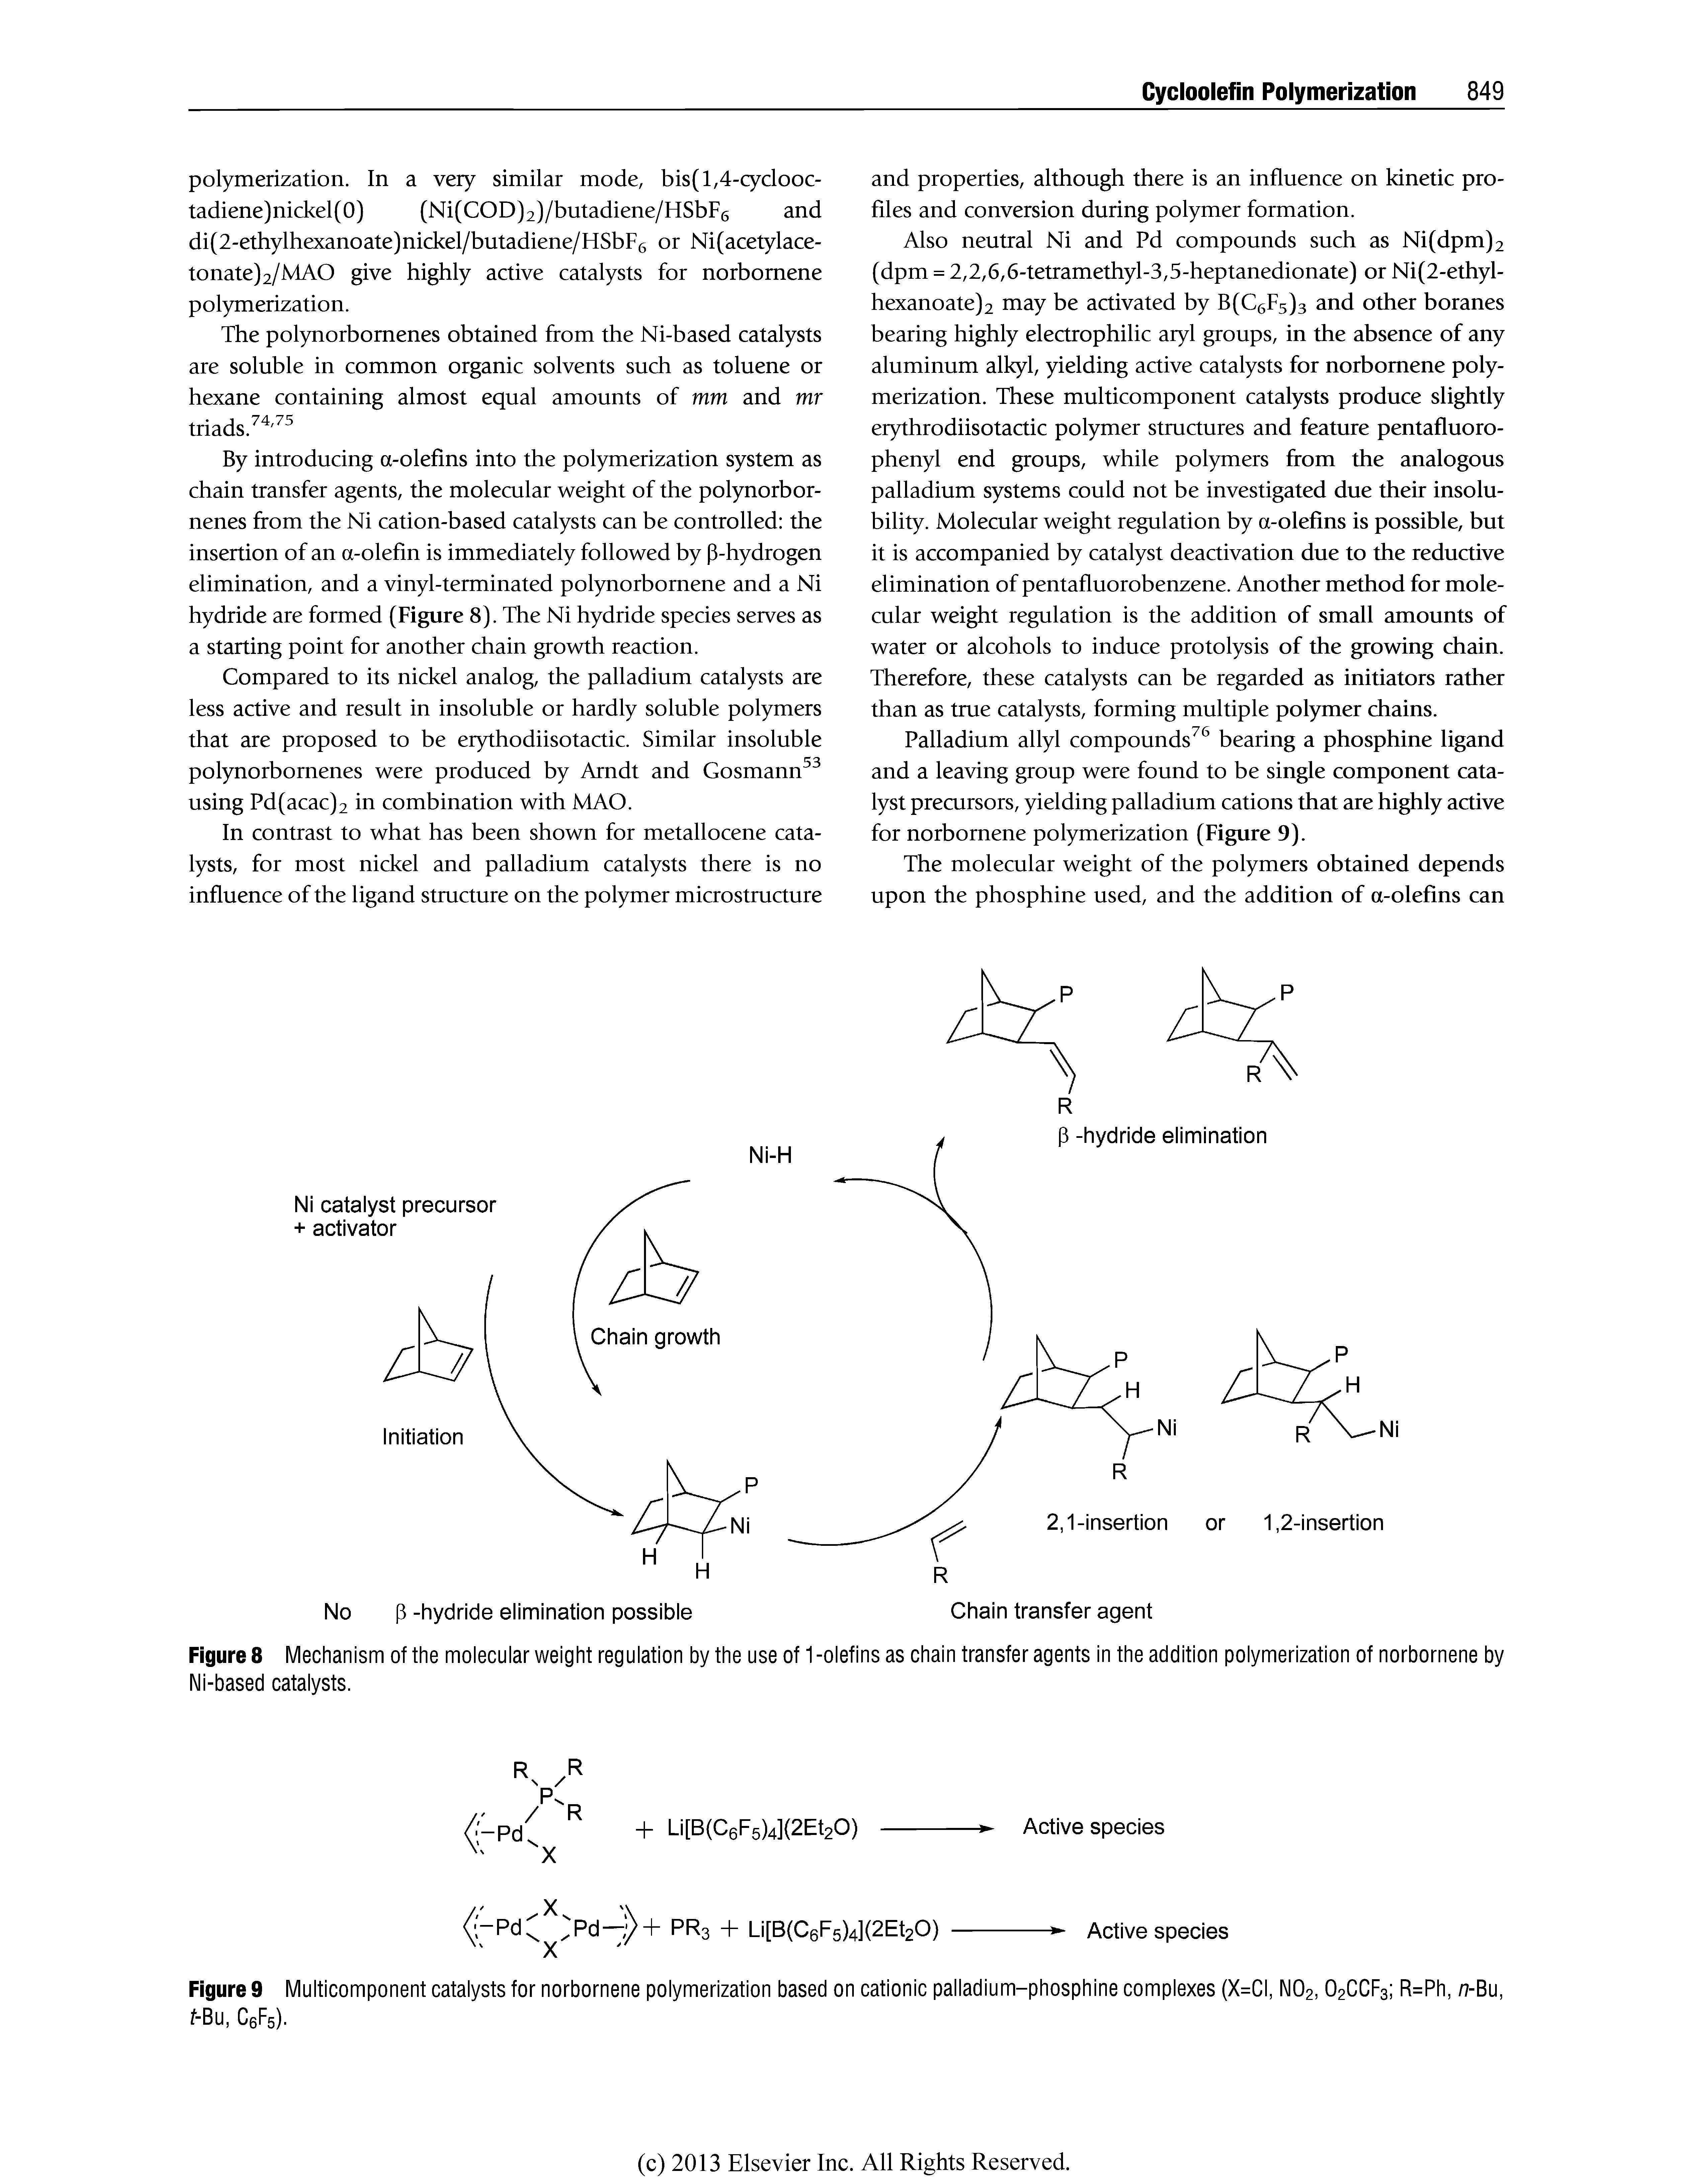 Figure 9 Multicomponent catalysts for norbomene polymerization based on cationic palladium-phosphine complexes (X=CI, NO2, O2CCF3 R=Ph, n-Bu, f-Bu, CeFs).